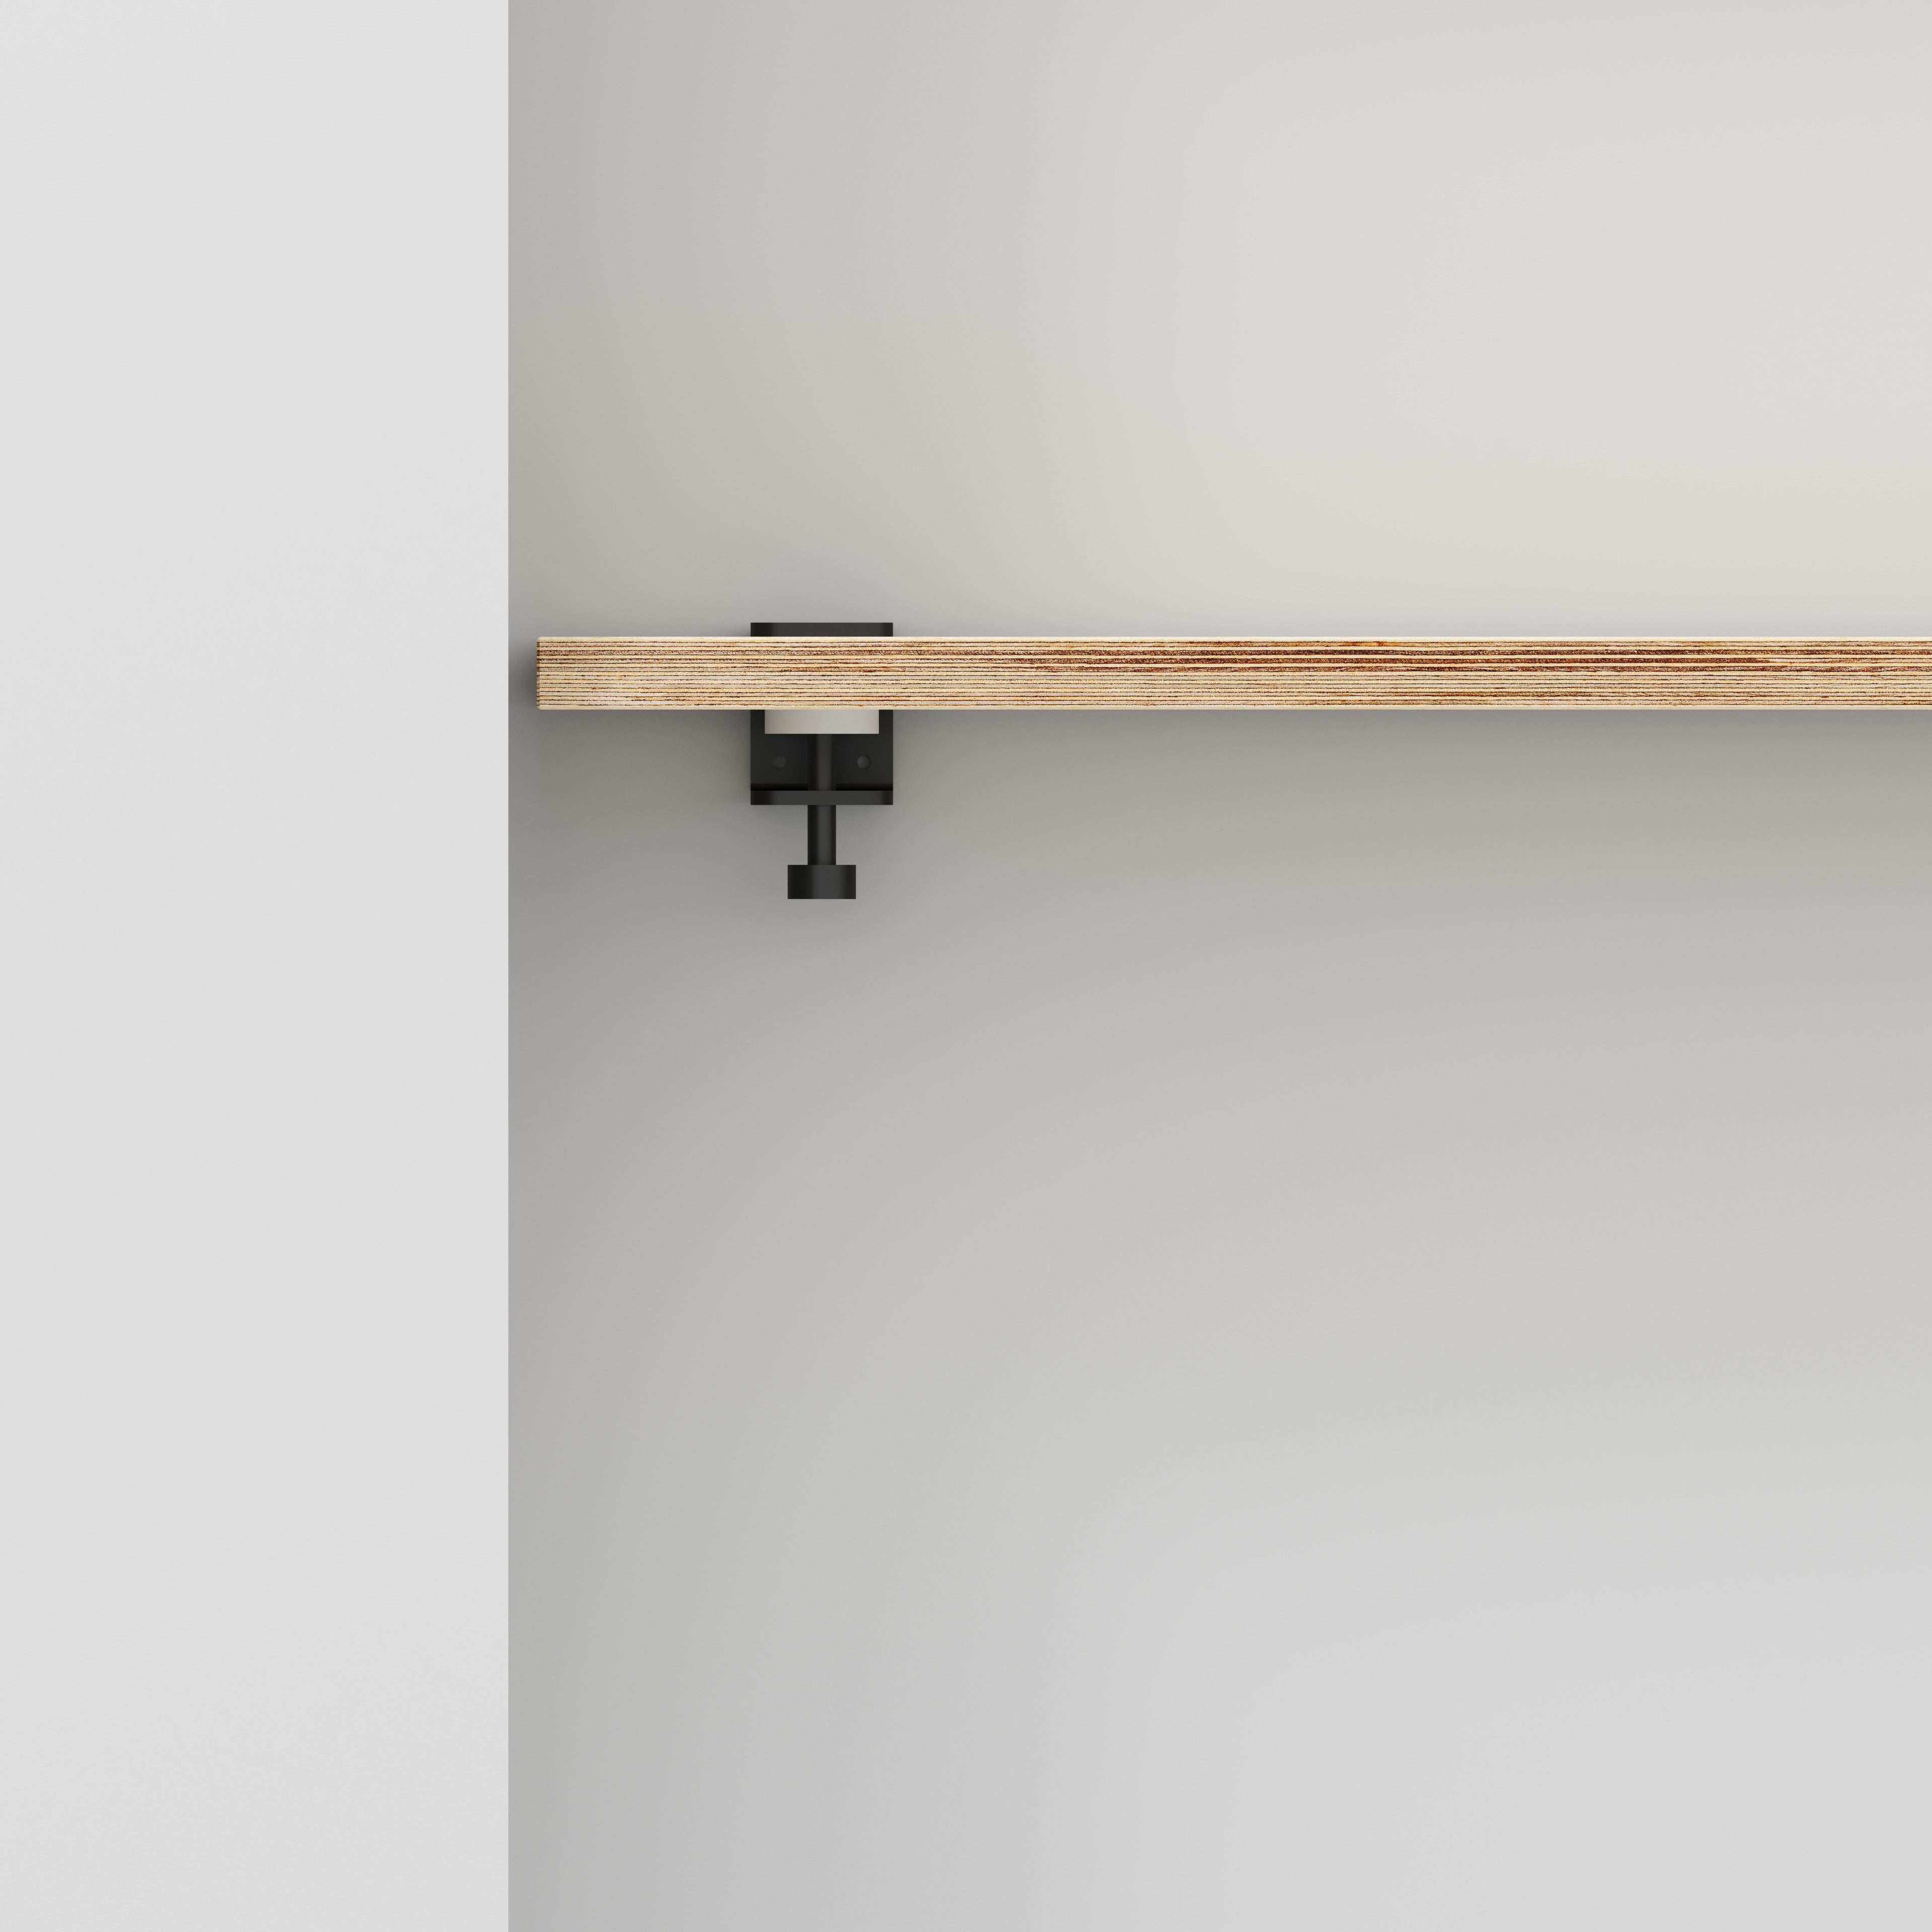 Custom Plywood Wall Shelf with Tiptoe Brackets